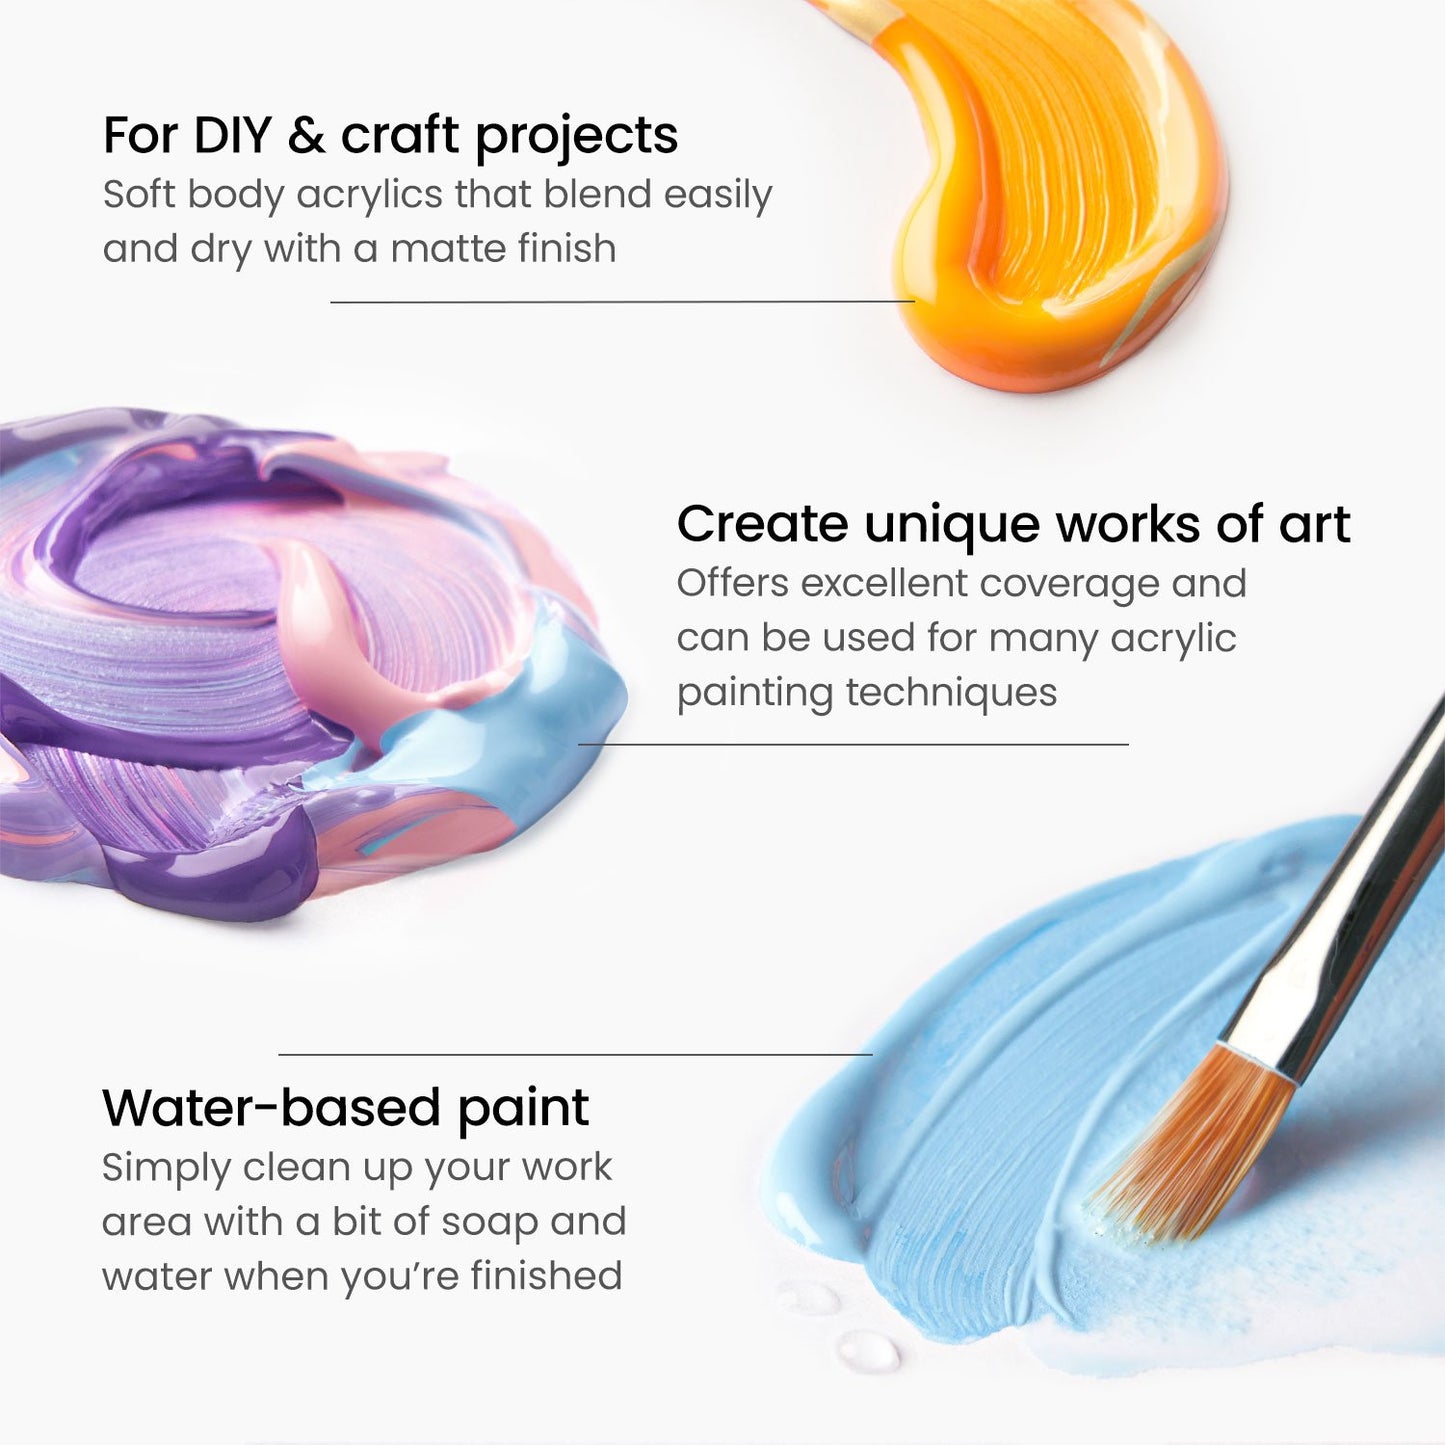 About the Arteza Craft Acrylic Paint